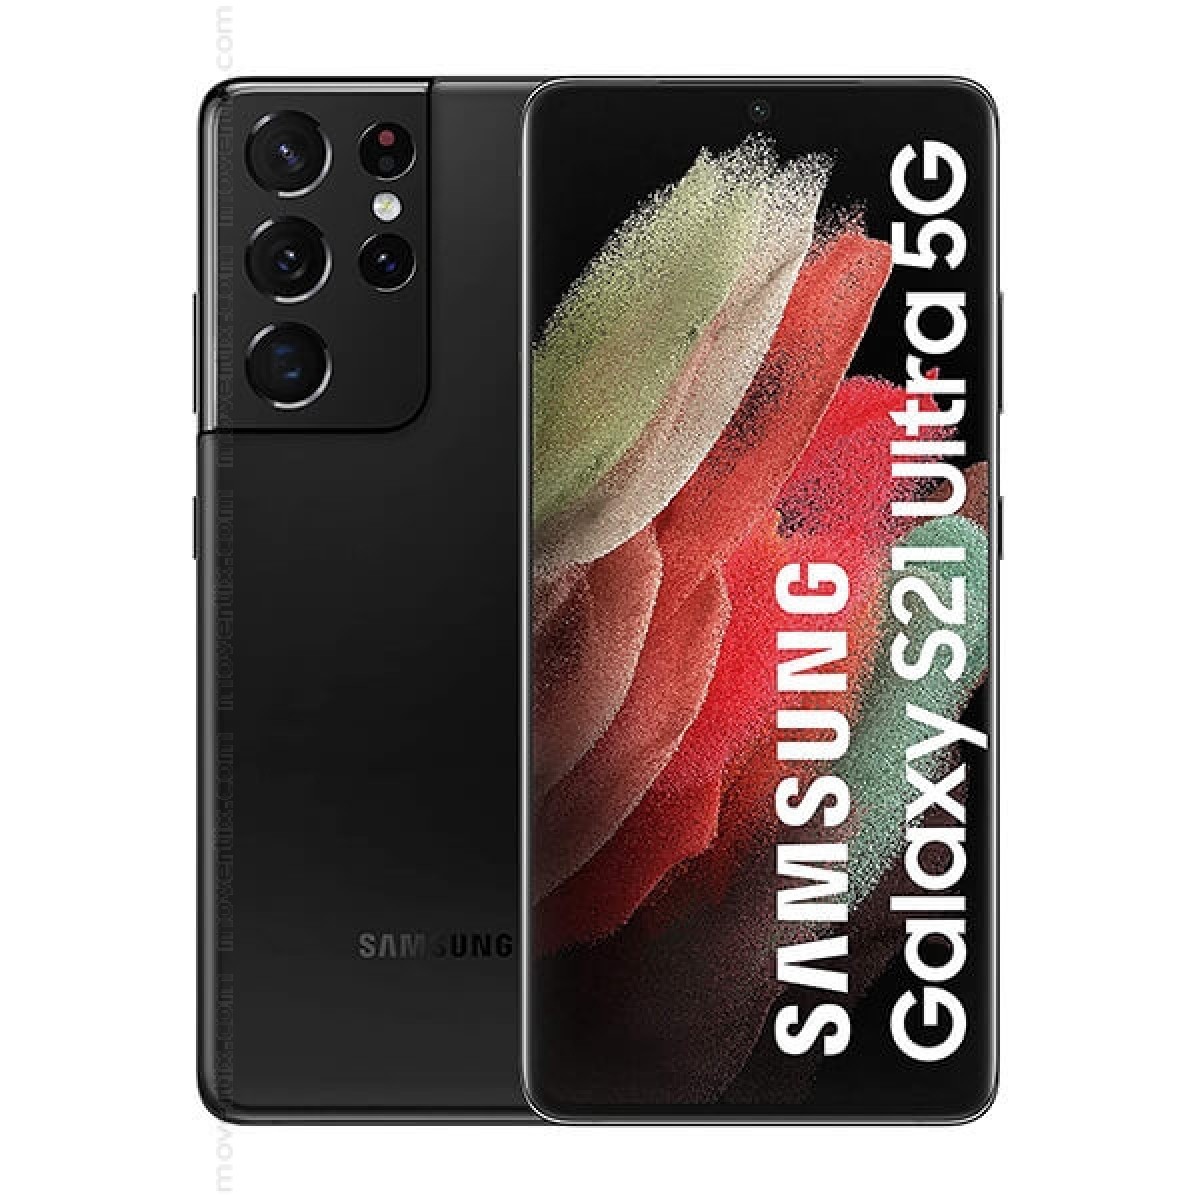 Samsung Galaxy S21 Ultra 5g Phantom Black 256gb And 12gb Ram Sm G998b Movertix Mobile Phones Shop